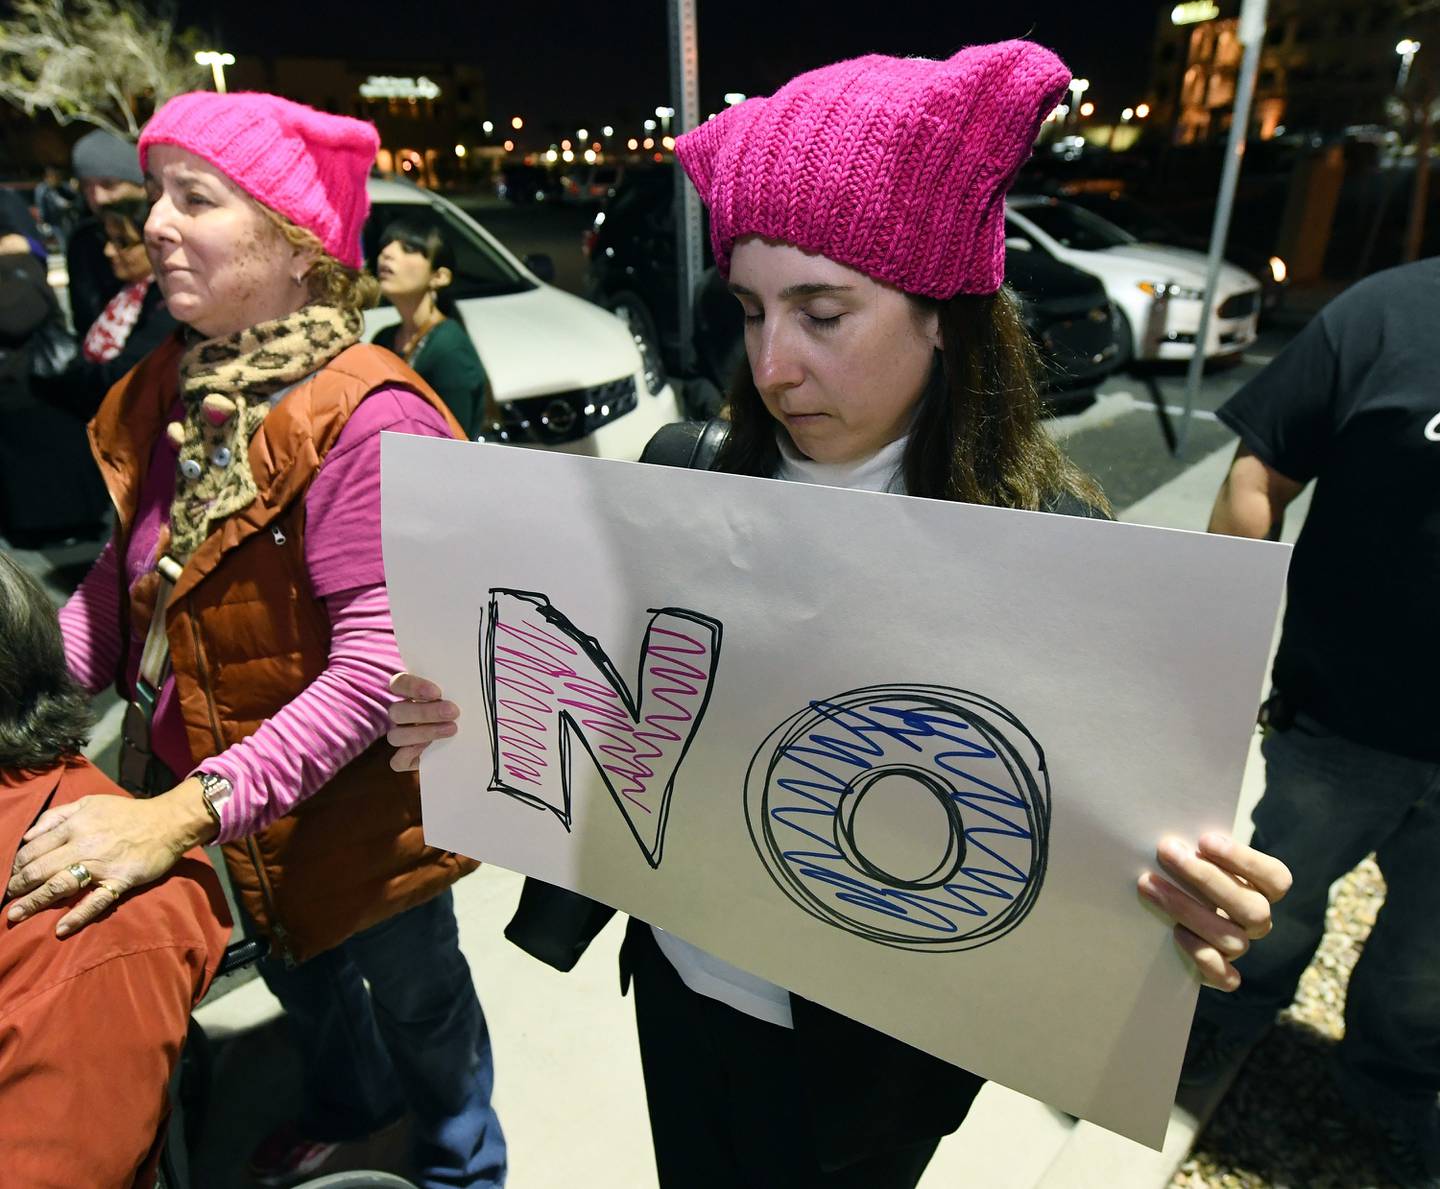 Demonstranter i 2017 iført såkalte pussy hats - hjemmestrikkede luer med katteører, et pek mot daværende president Donald Trump og hans sexistiske ytringer.